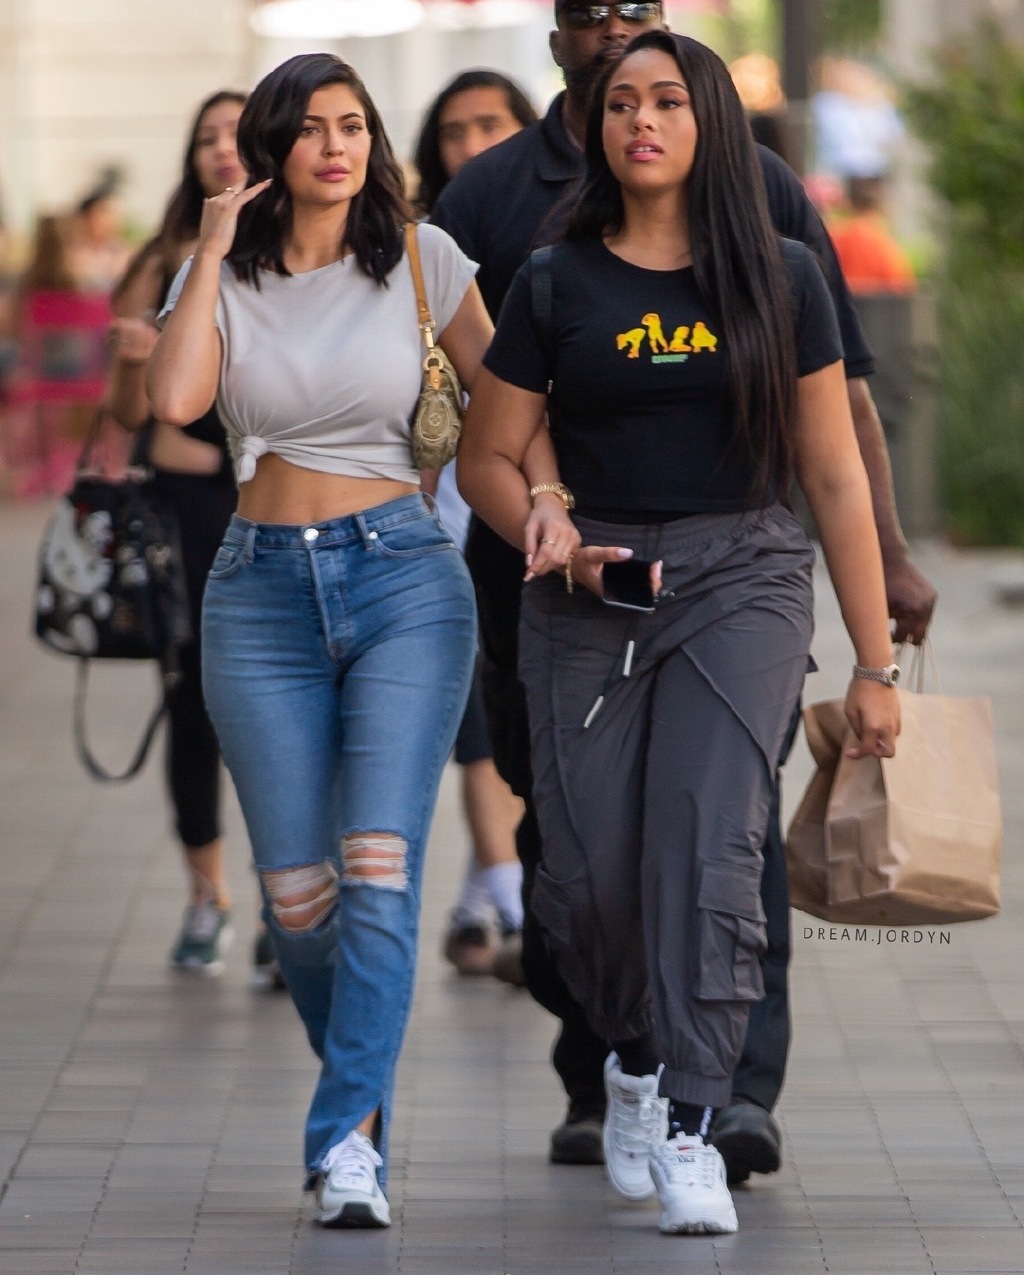 Kylie Jenner and Jordyn Woods ​​​​